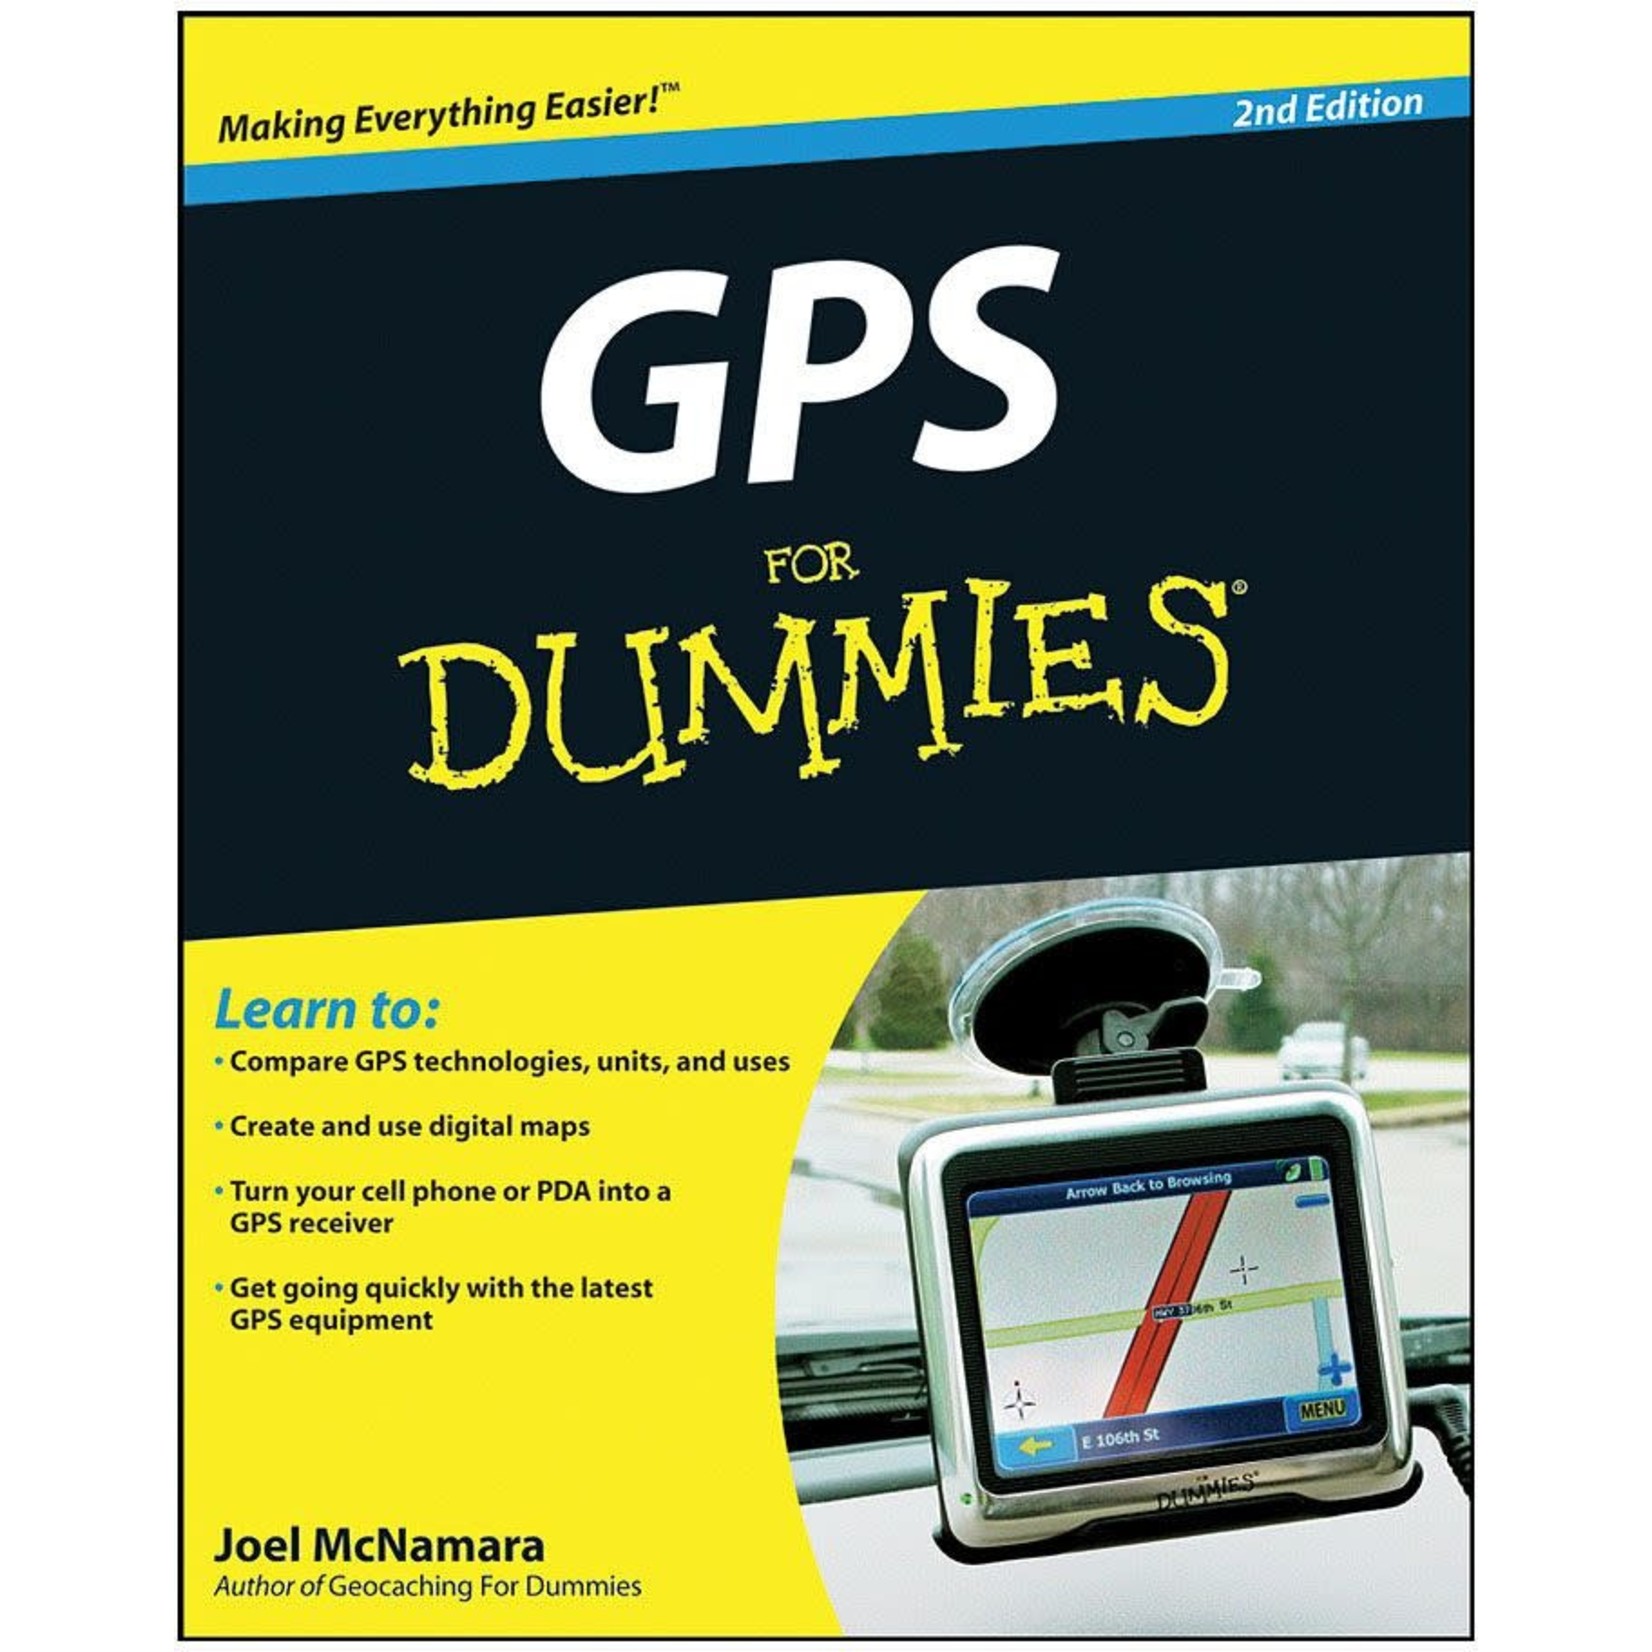 GPS FOR DUMMIES